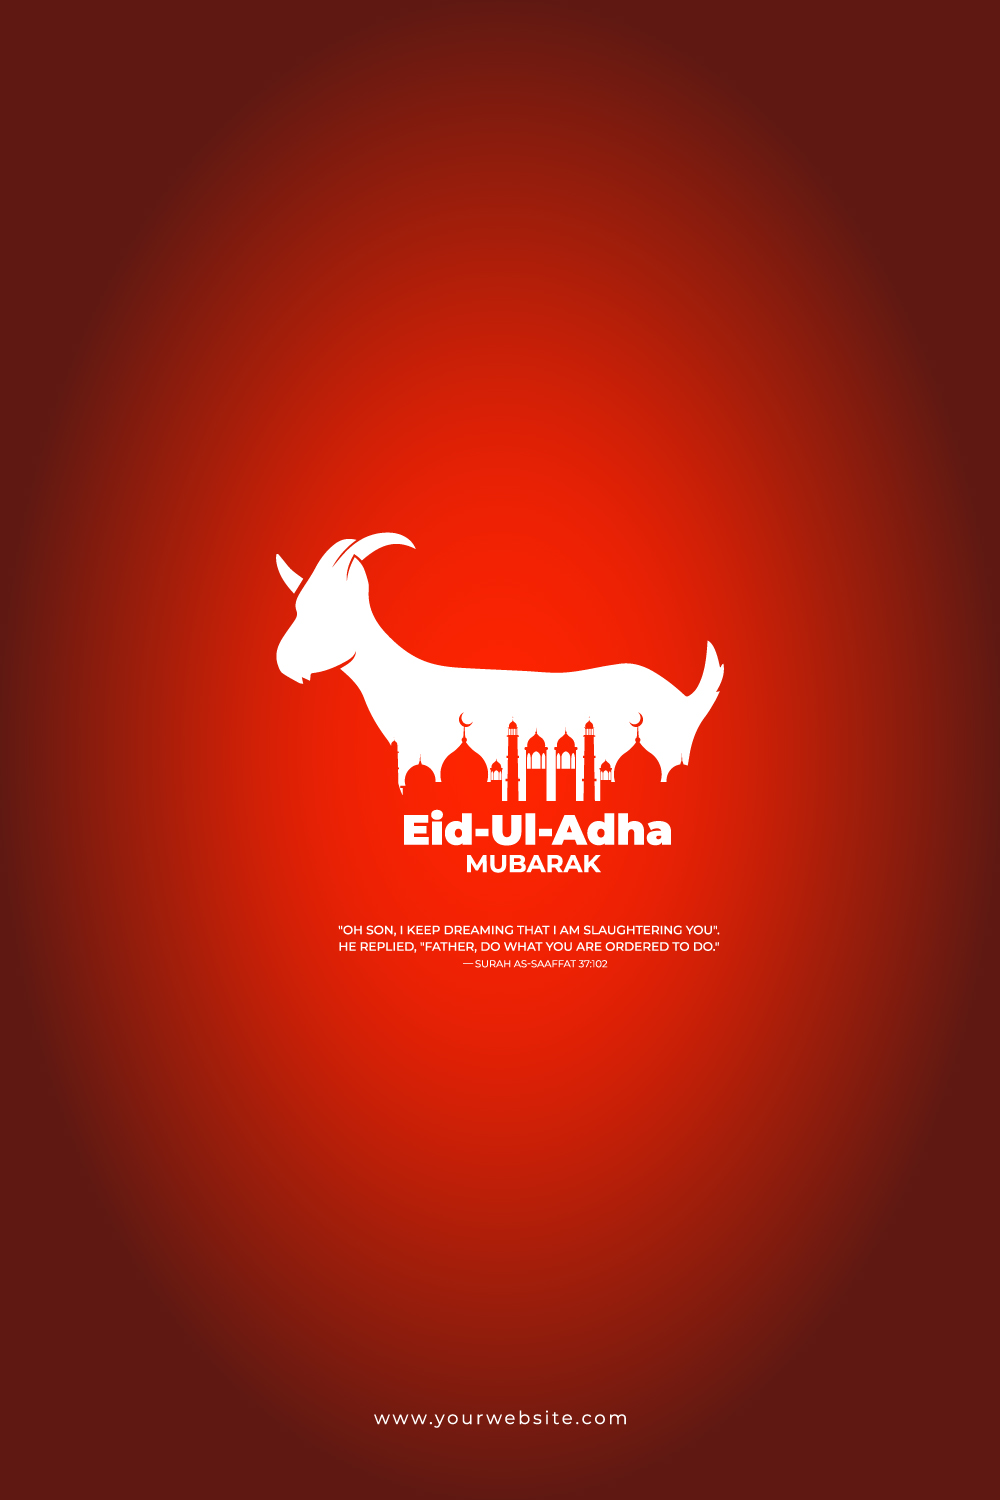 Eid Ul adha festival Animal sacrifice background post design pinterest preview image.